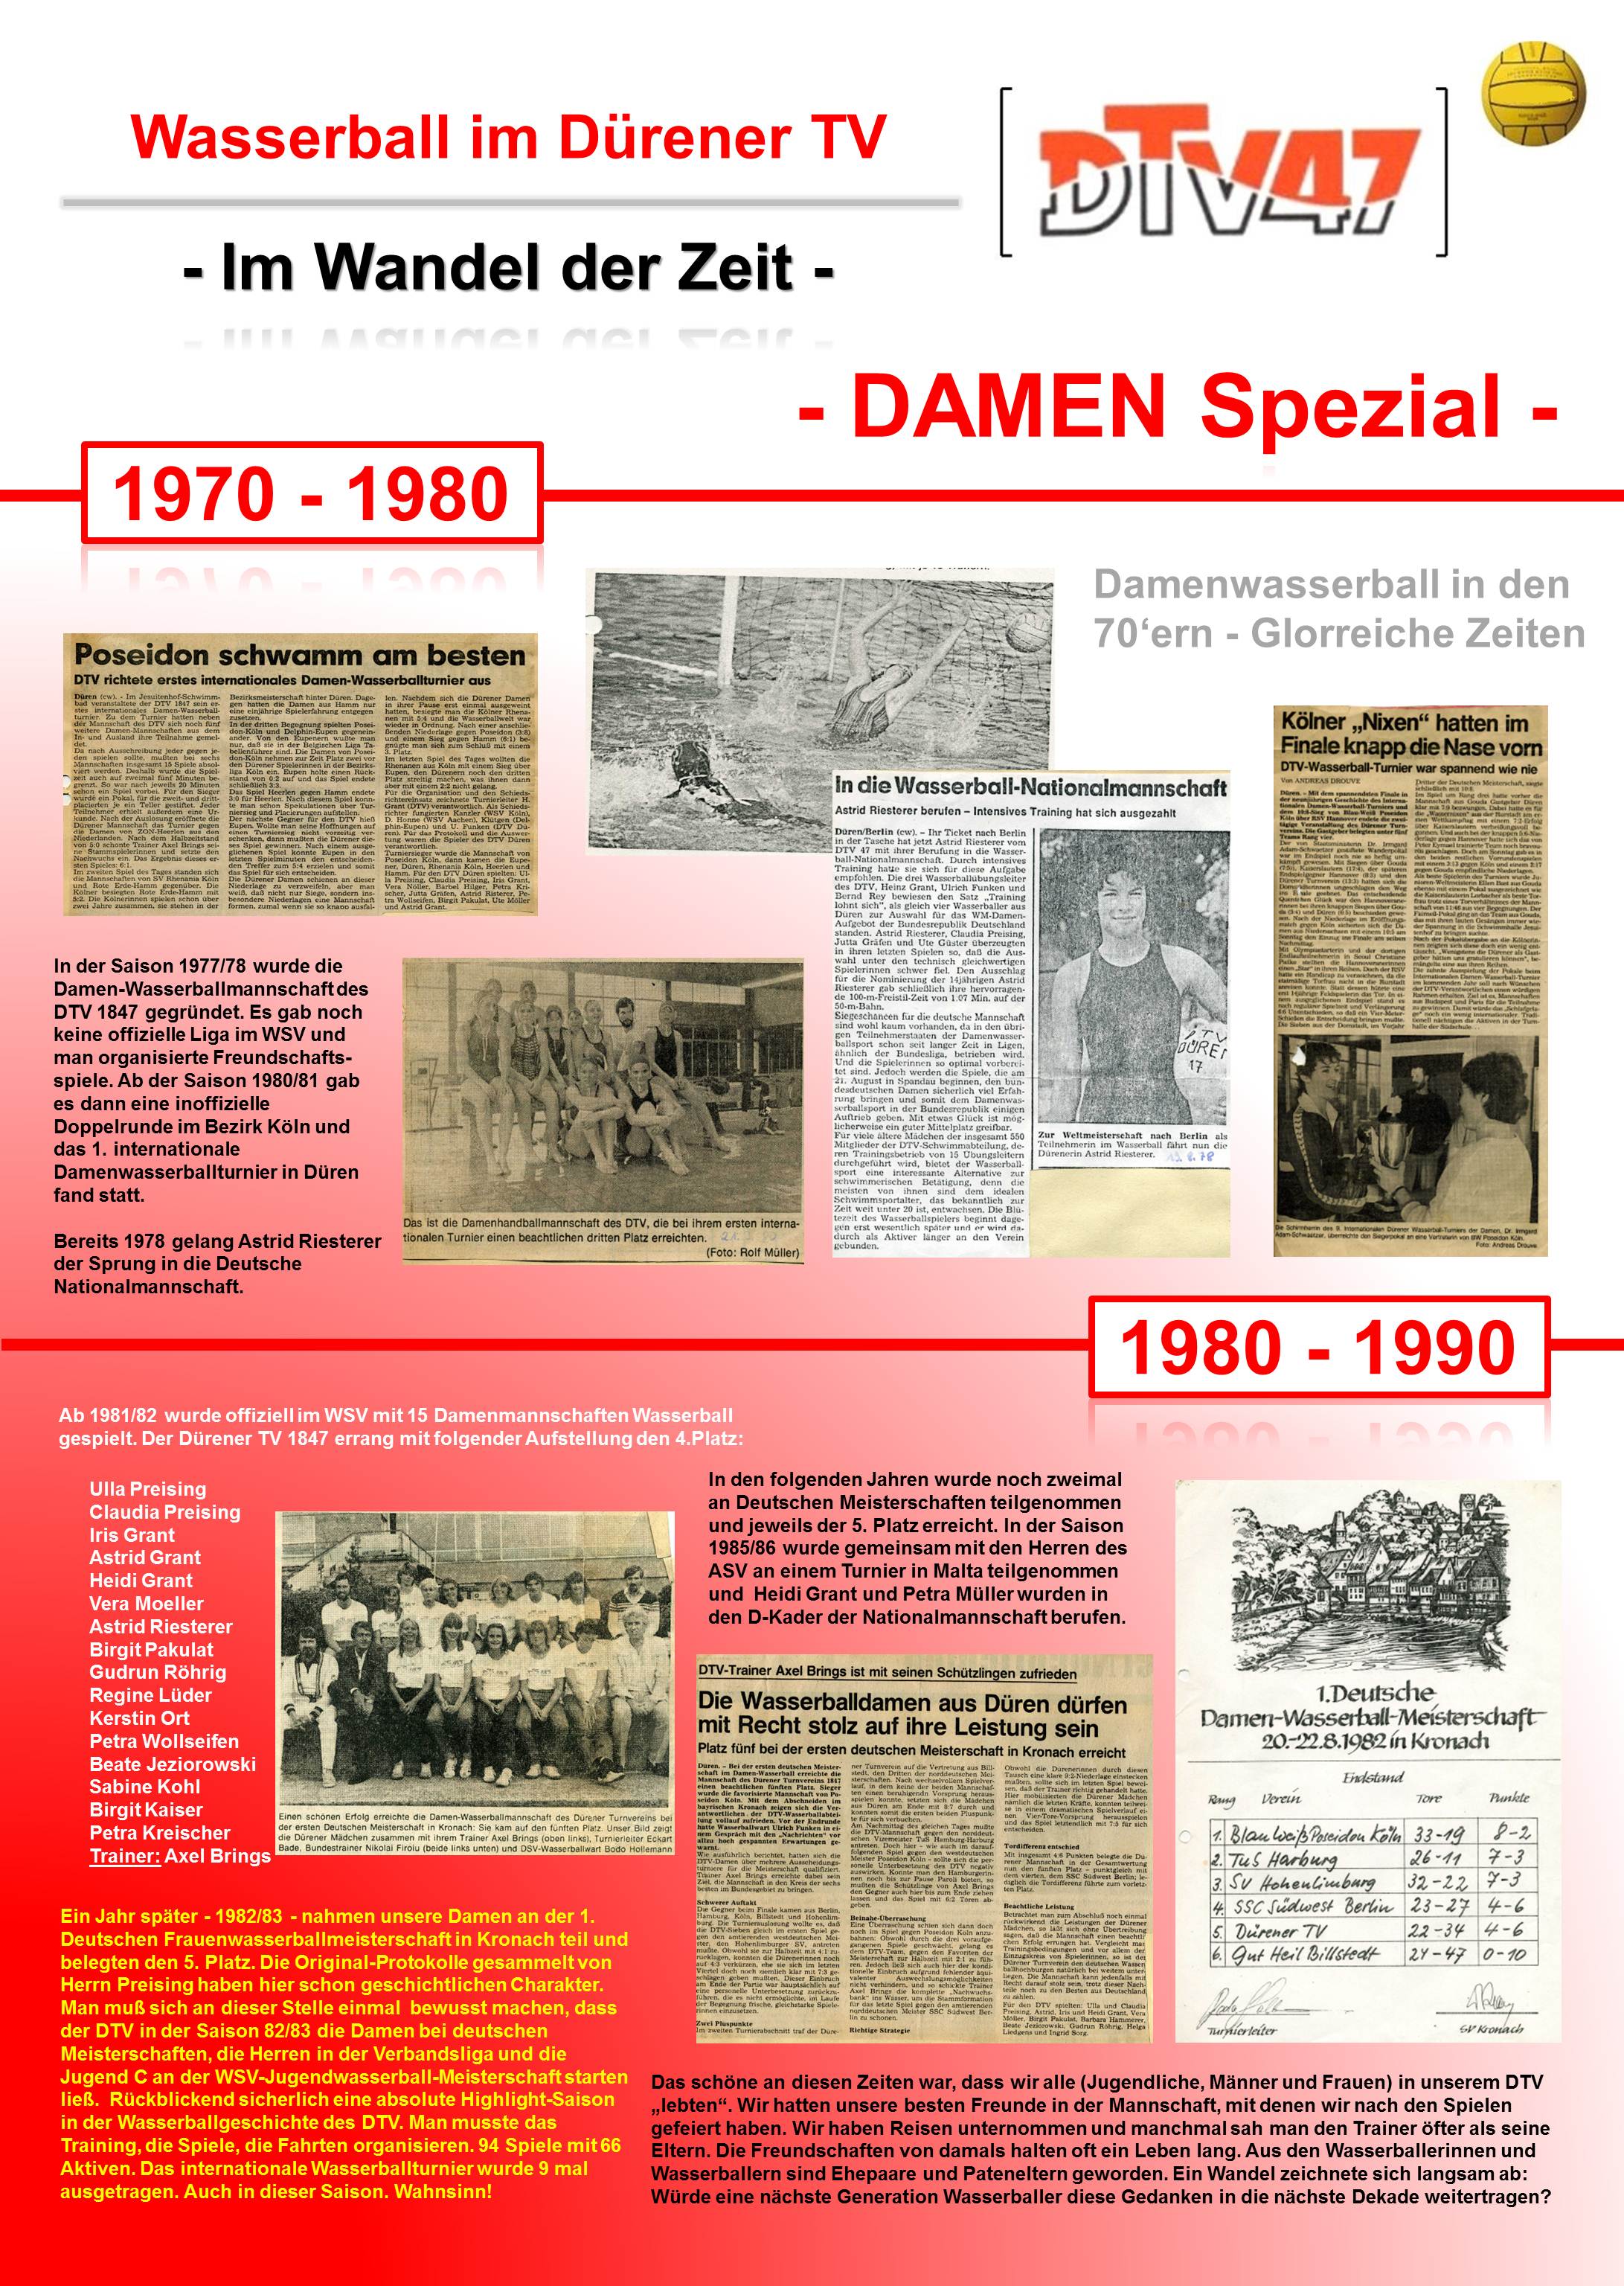 files/dtv47/abteilungen/wasserball/Geschichte/DTV History - Damen Spezial.jpg